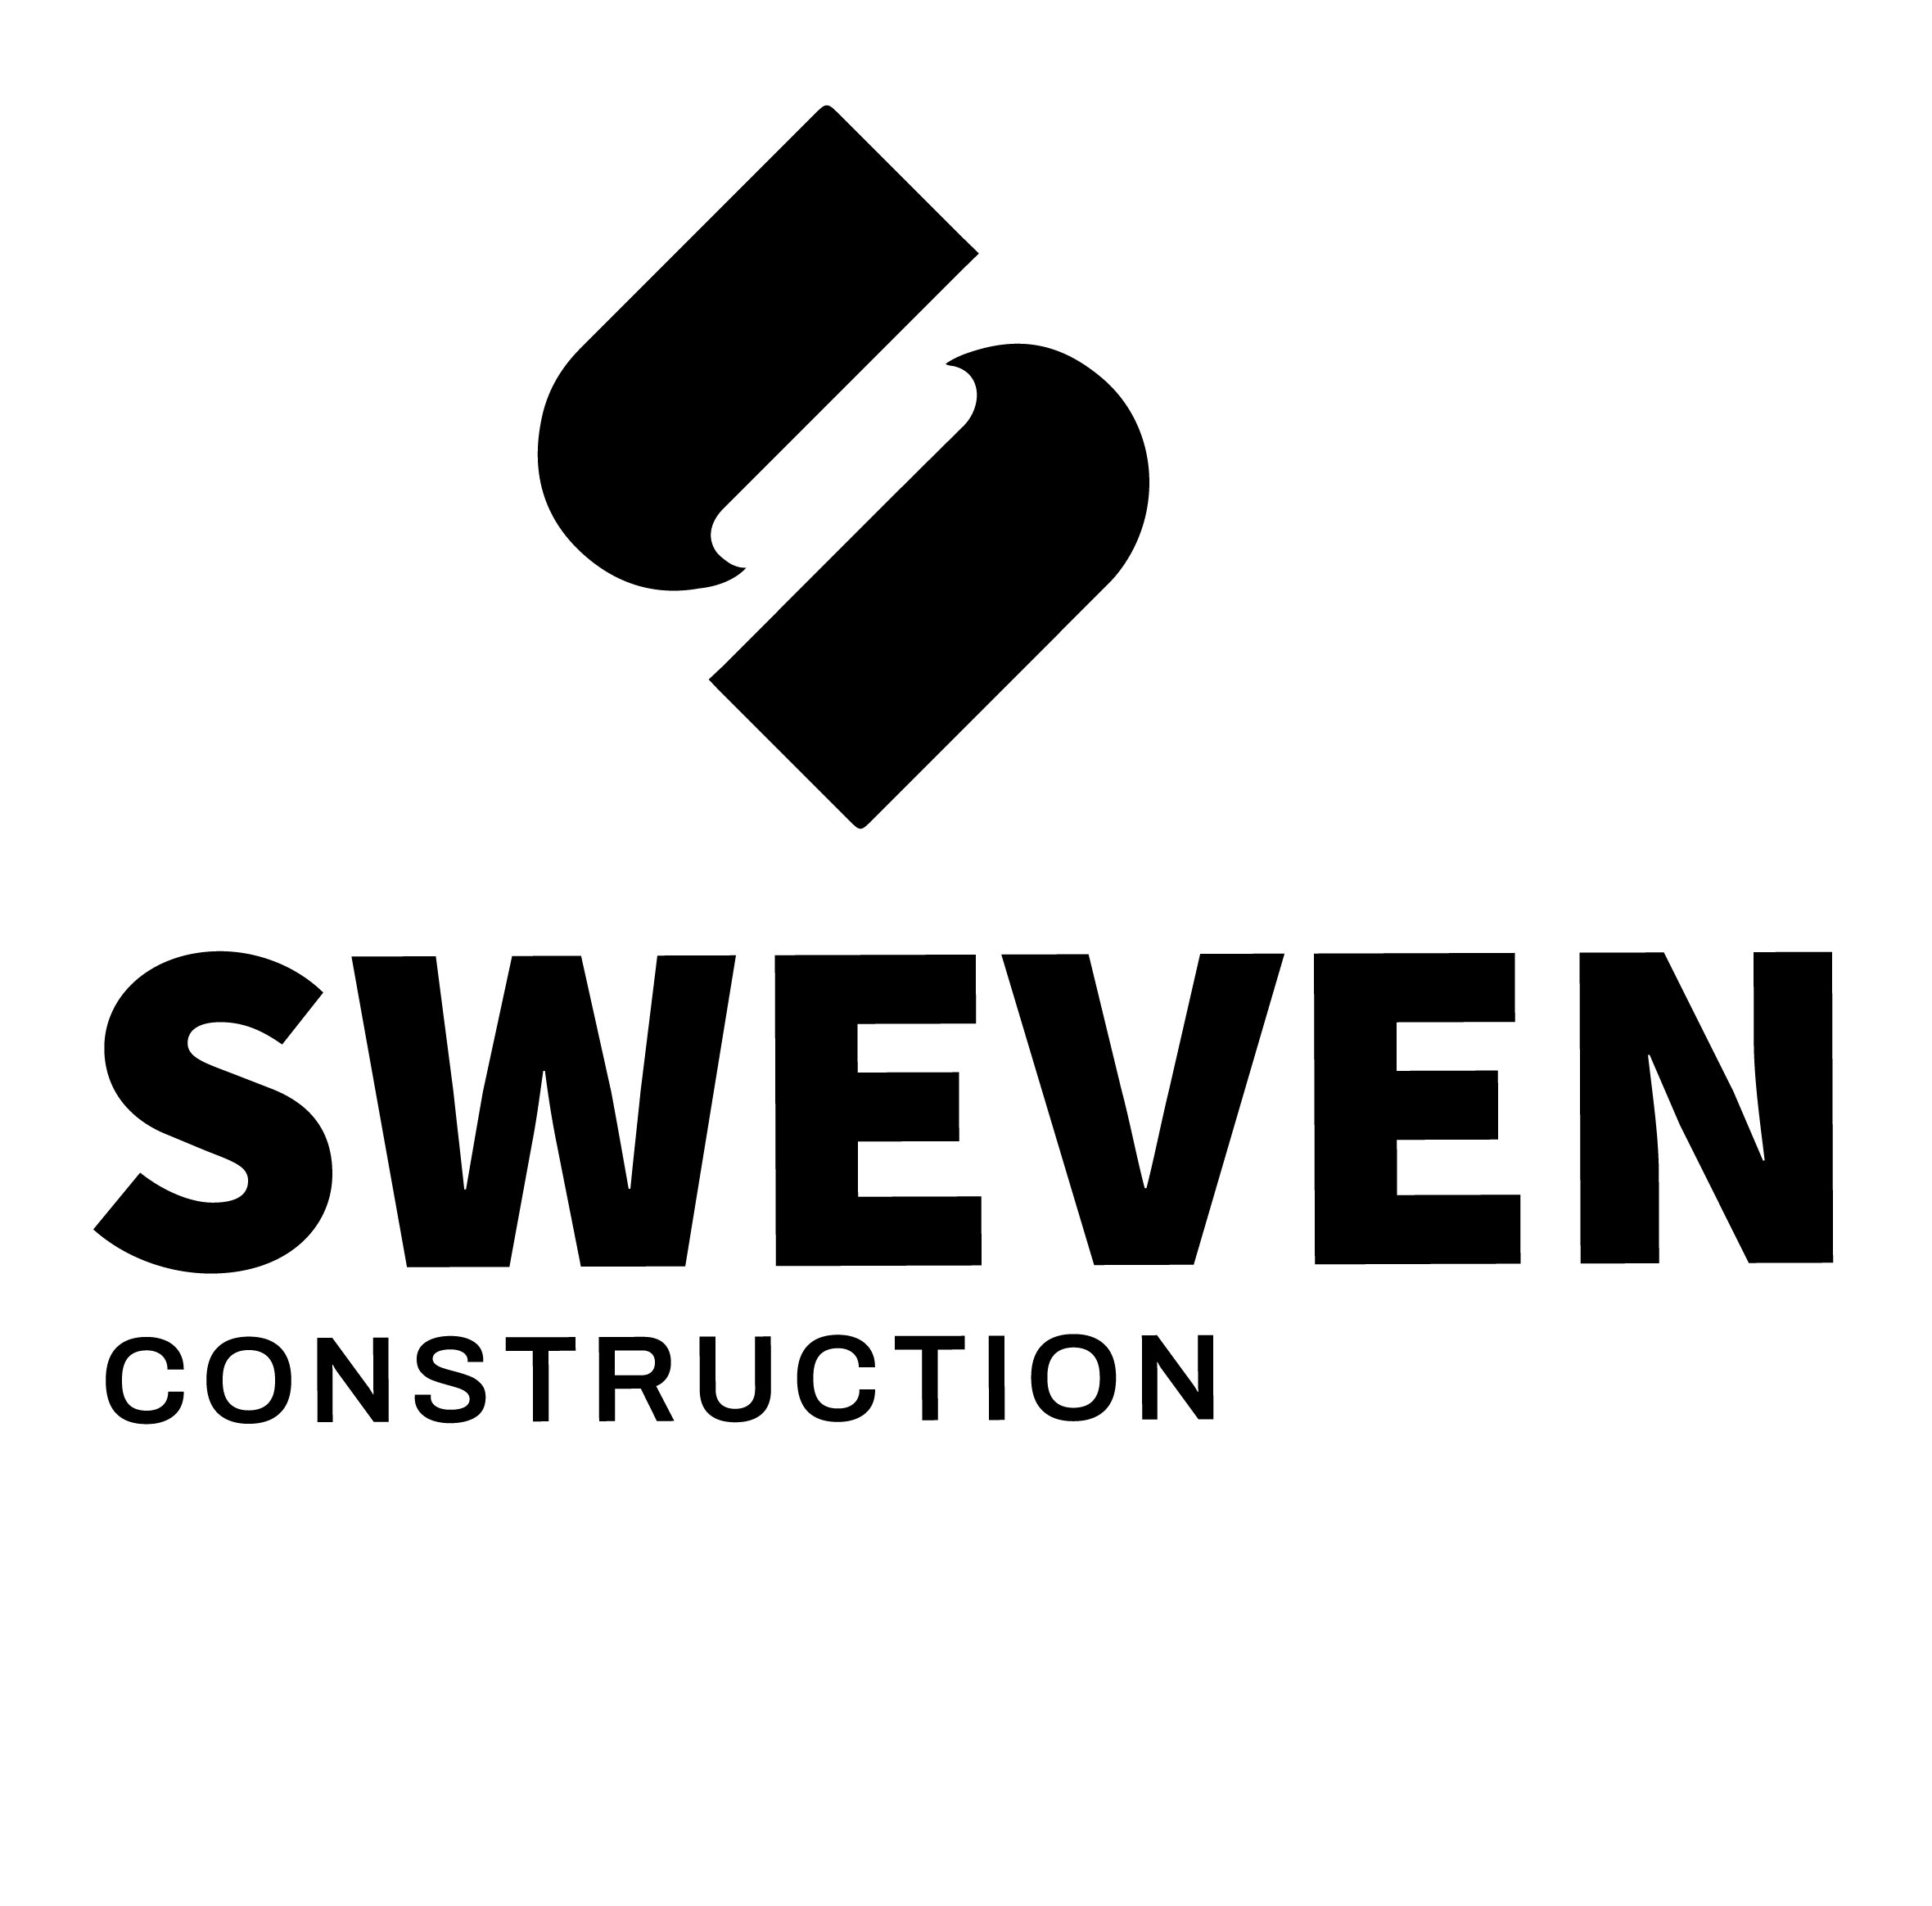 SWEVEN Construction